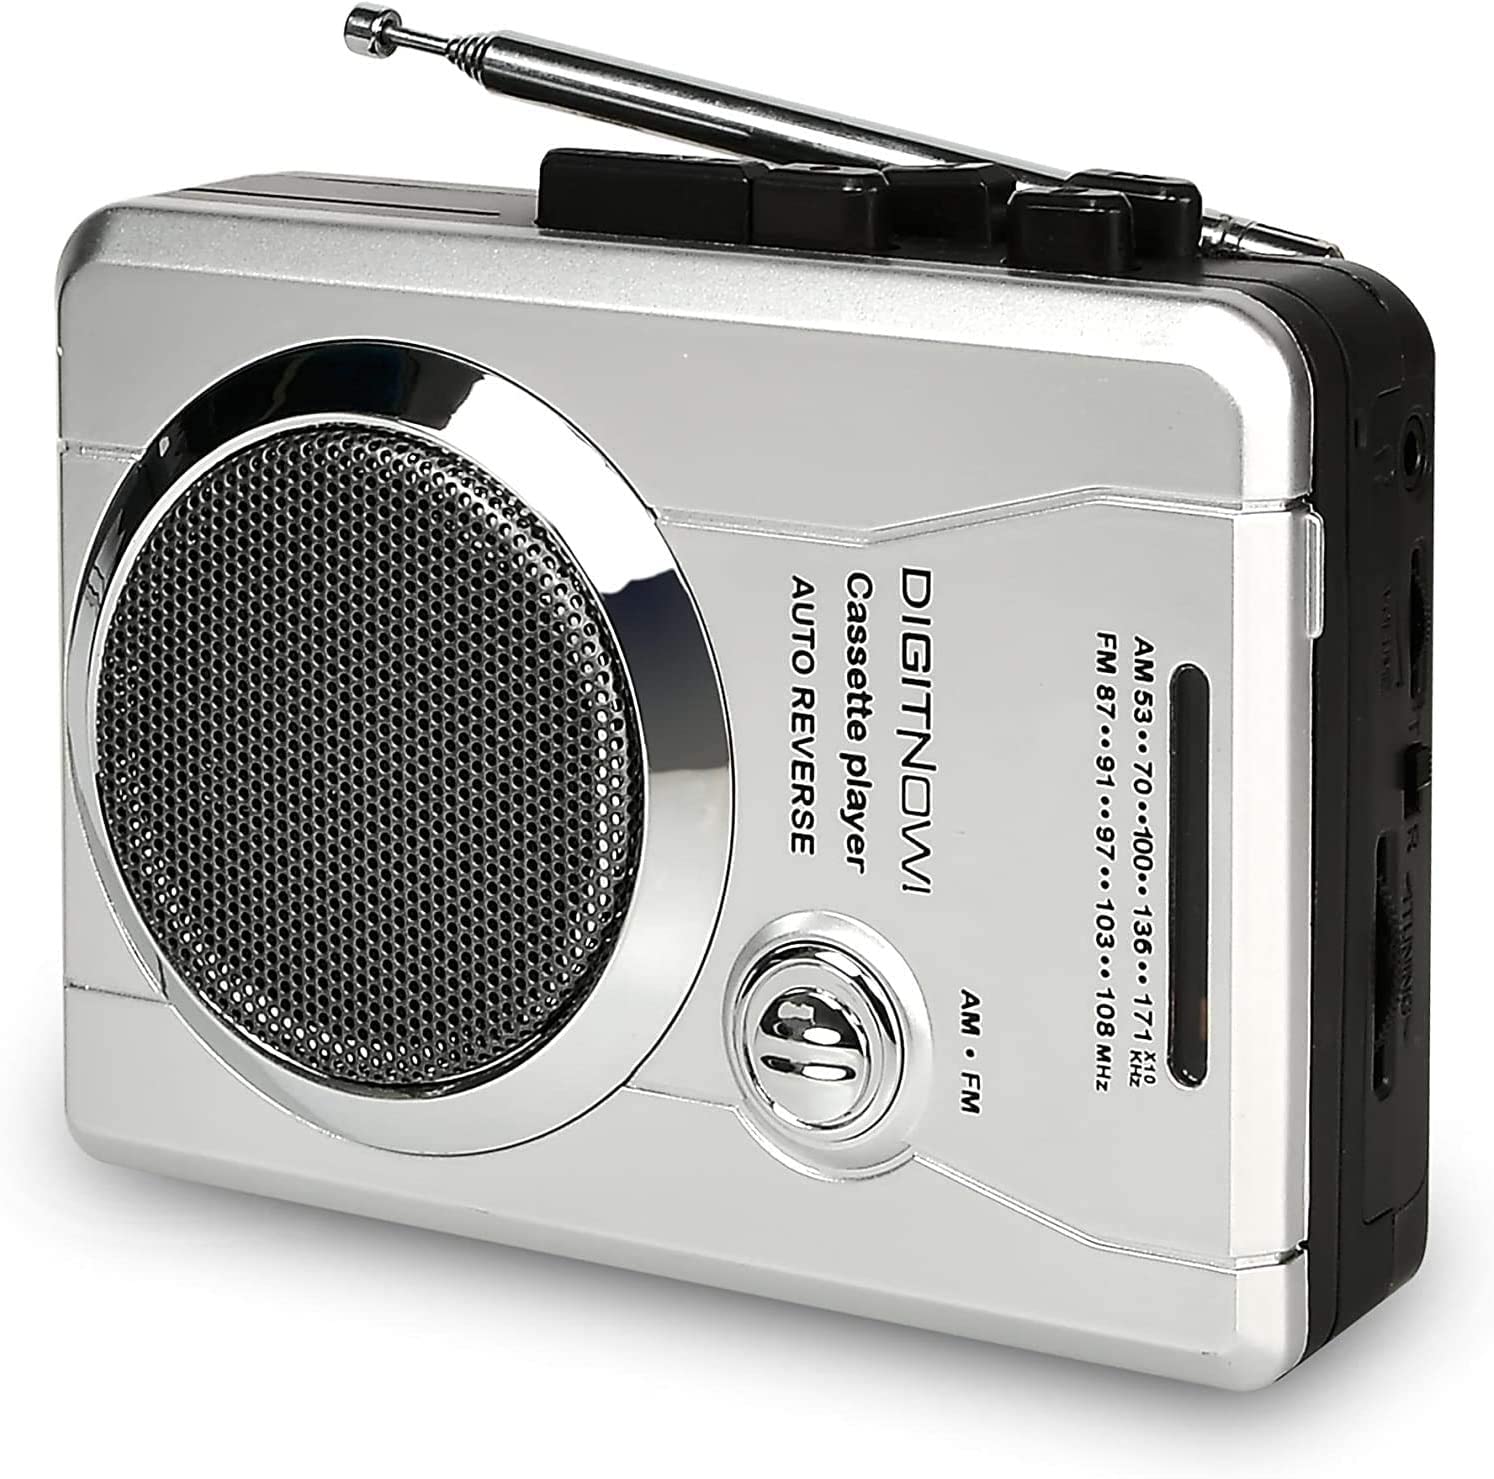  AM/FM Radio Cassette Player Converter, Voice Recorder